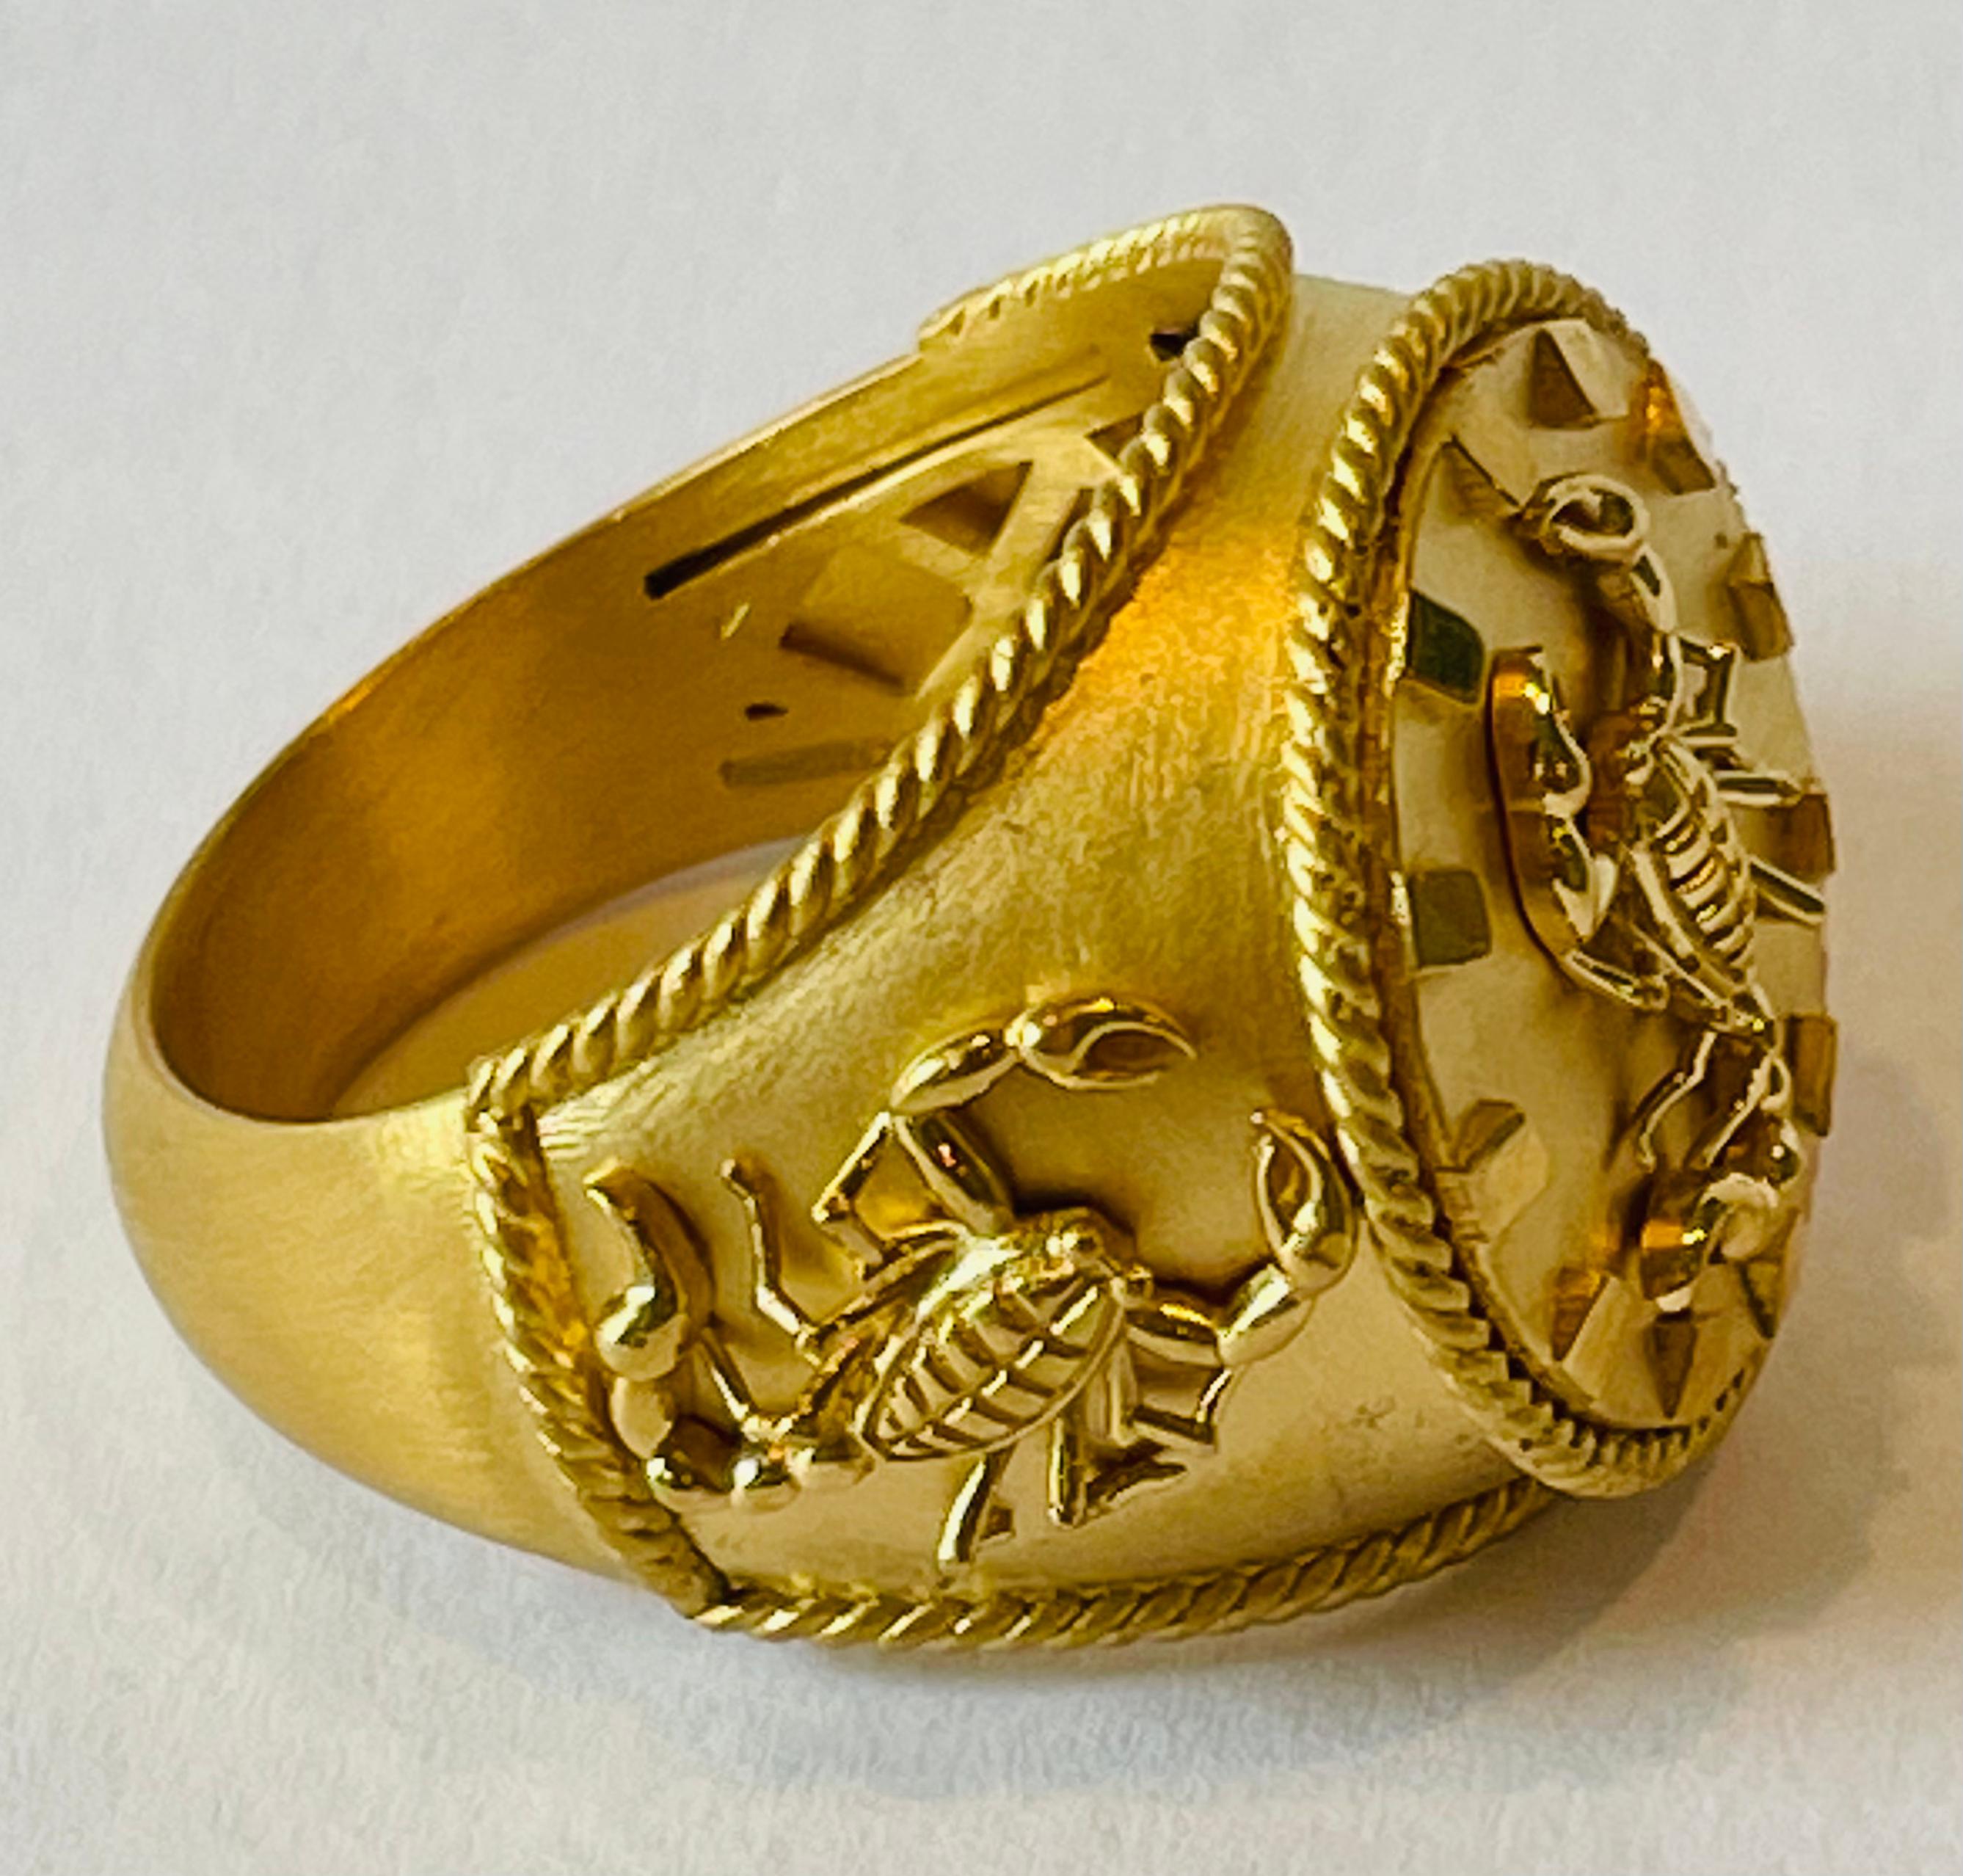 Art Deco Zodiac Scorpion Ring in 18k Gold by Tagili For Sale